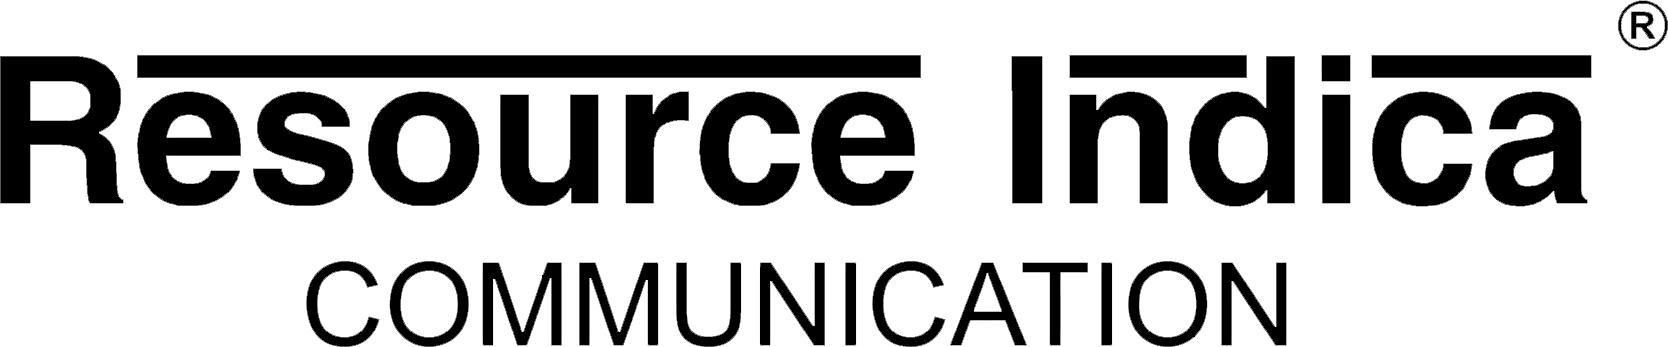 Resource indica logo